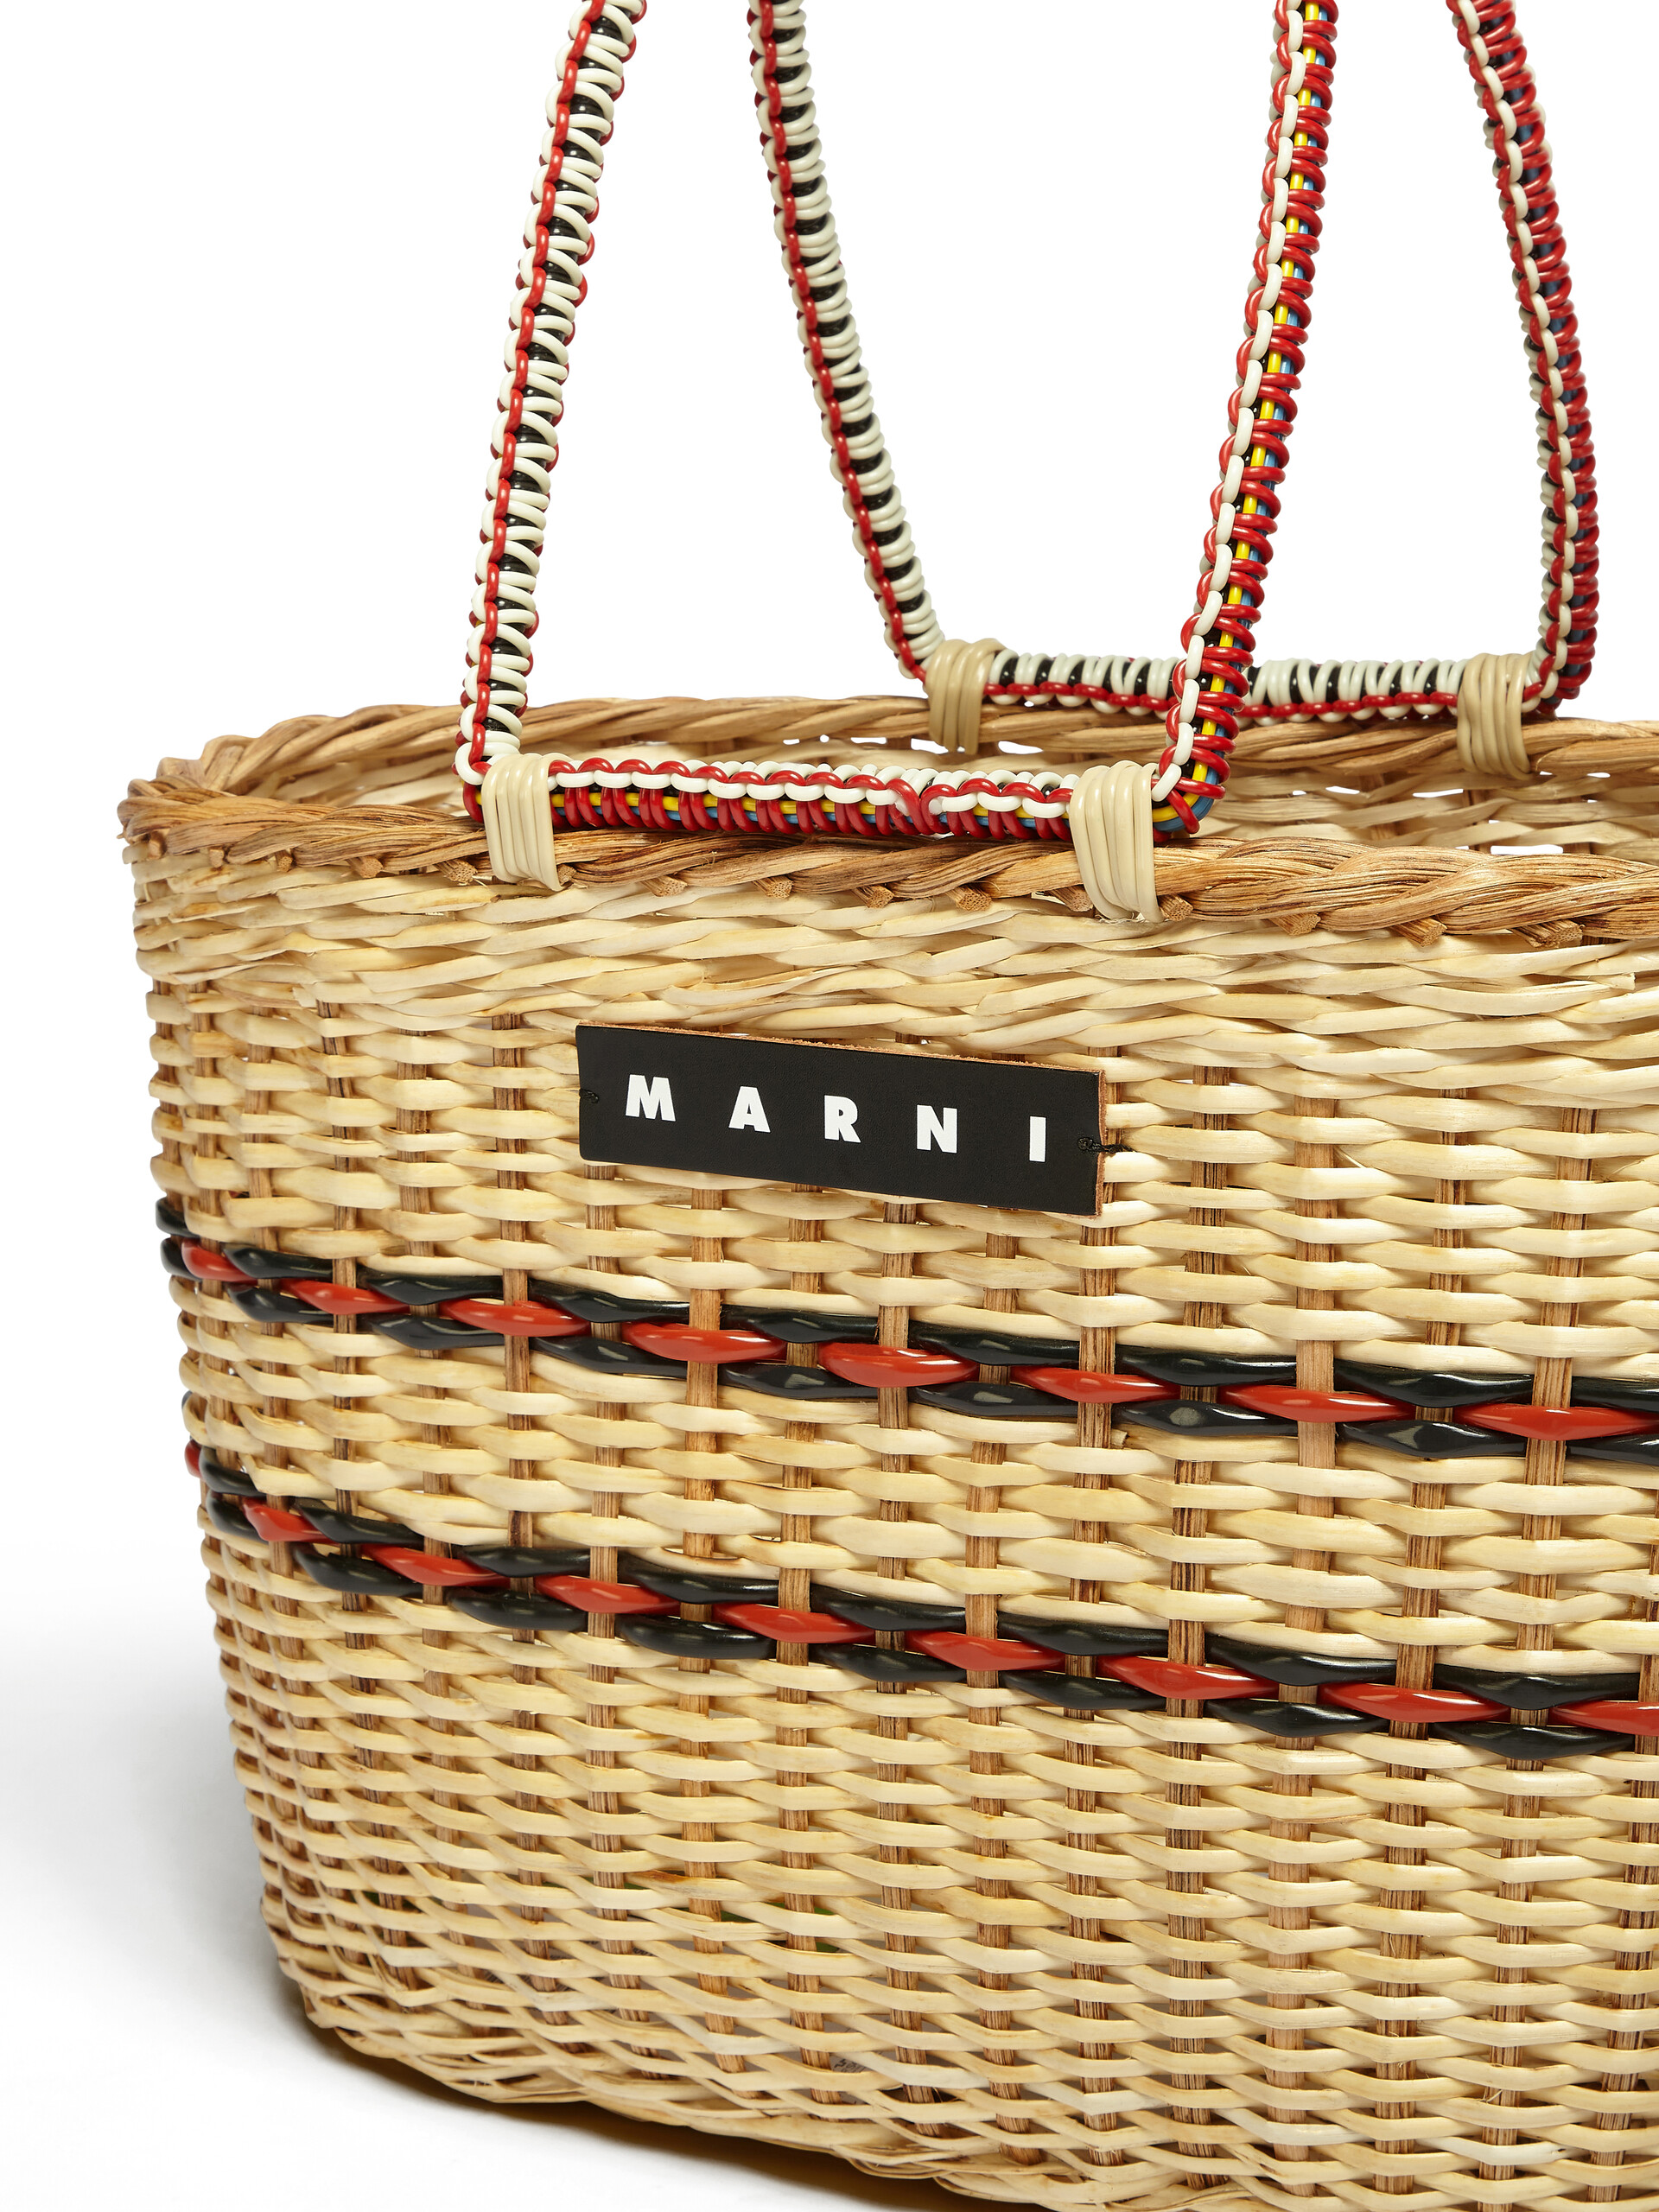 MARNI MARKET bag in red stripe natural fibre - Bags - Image 4